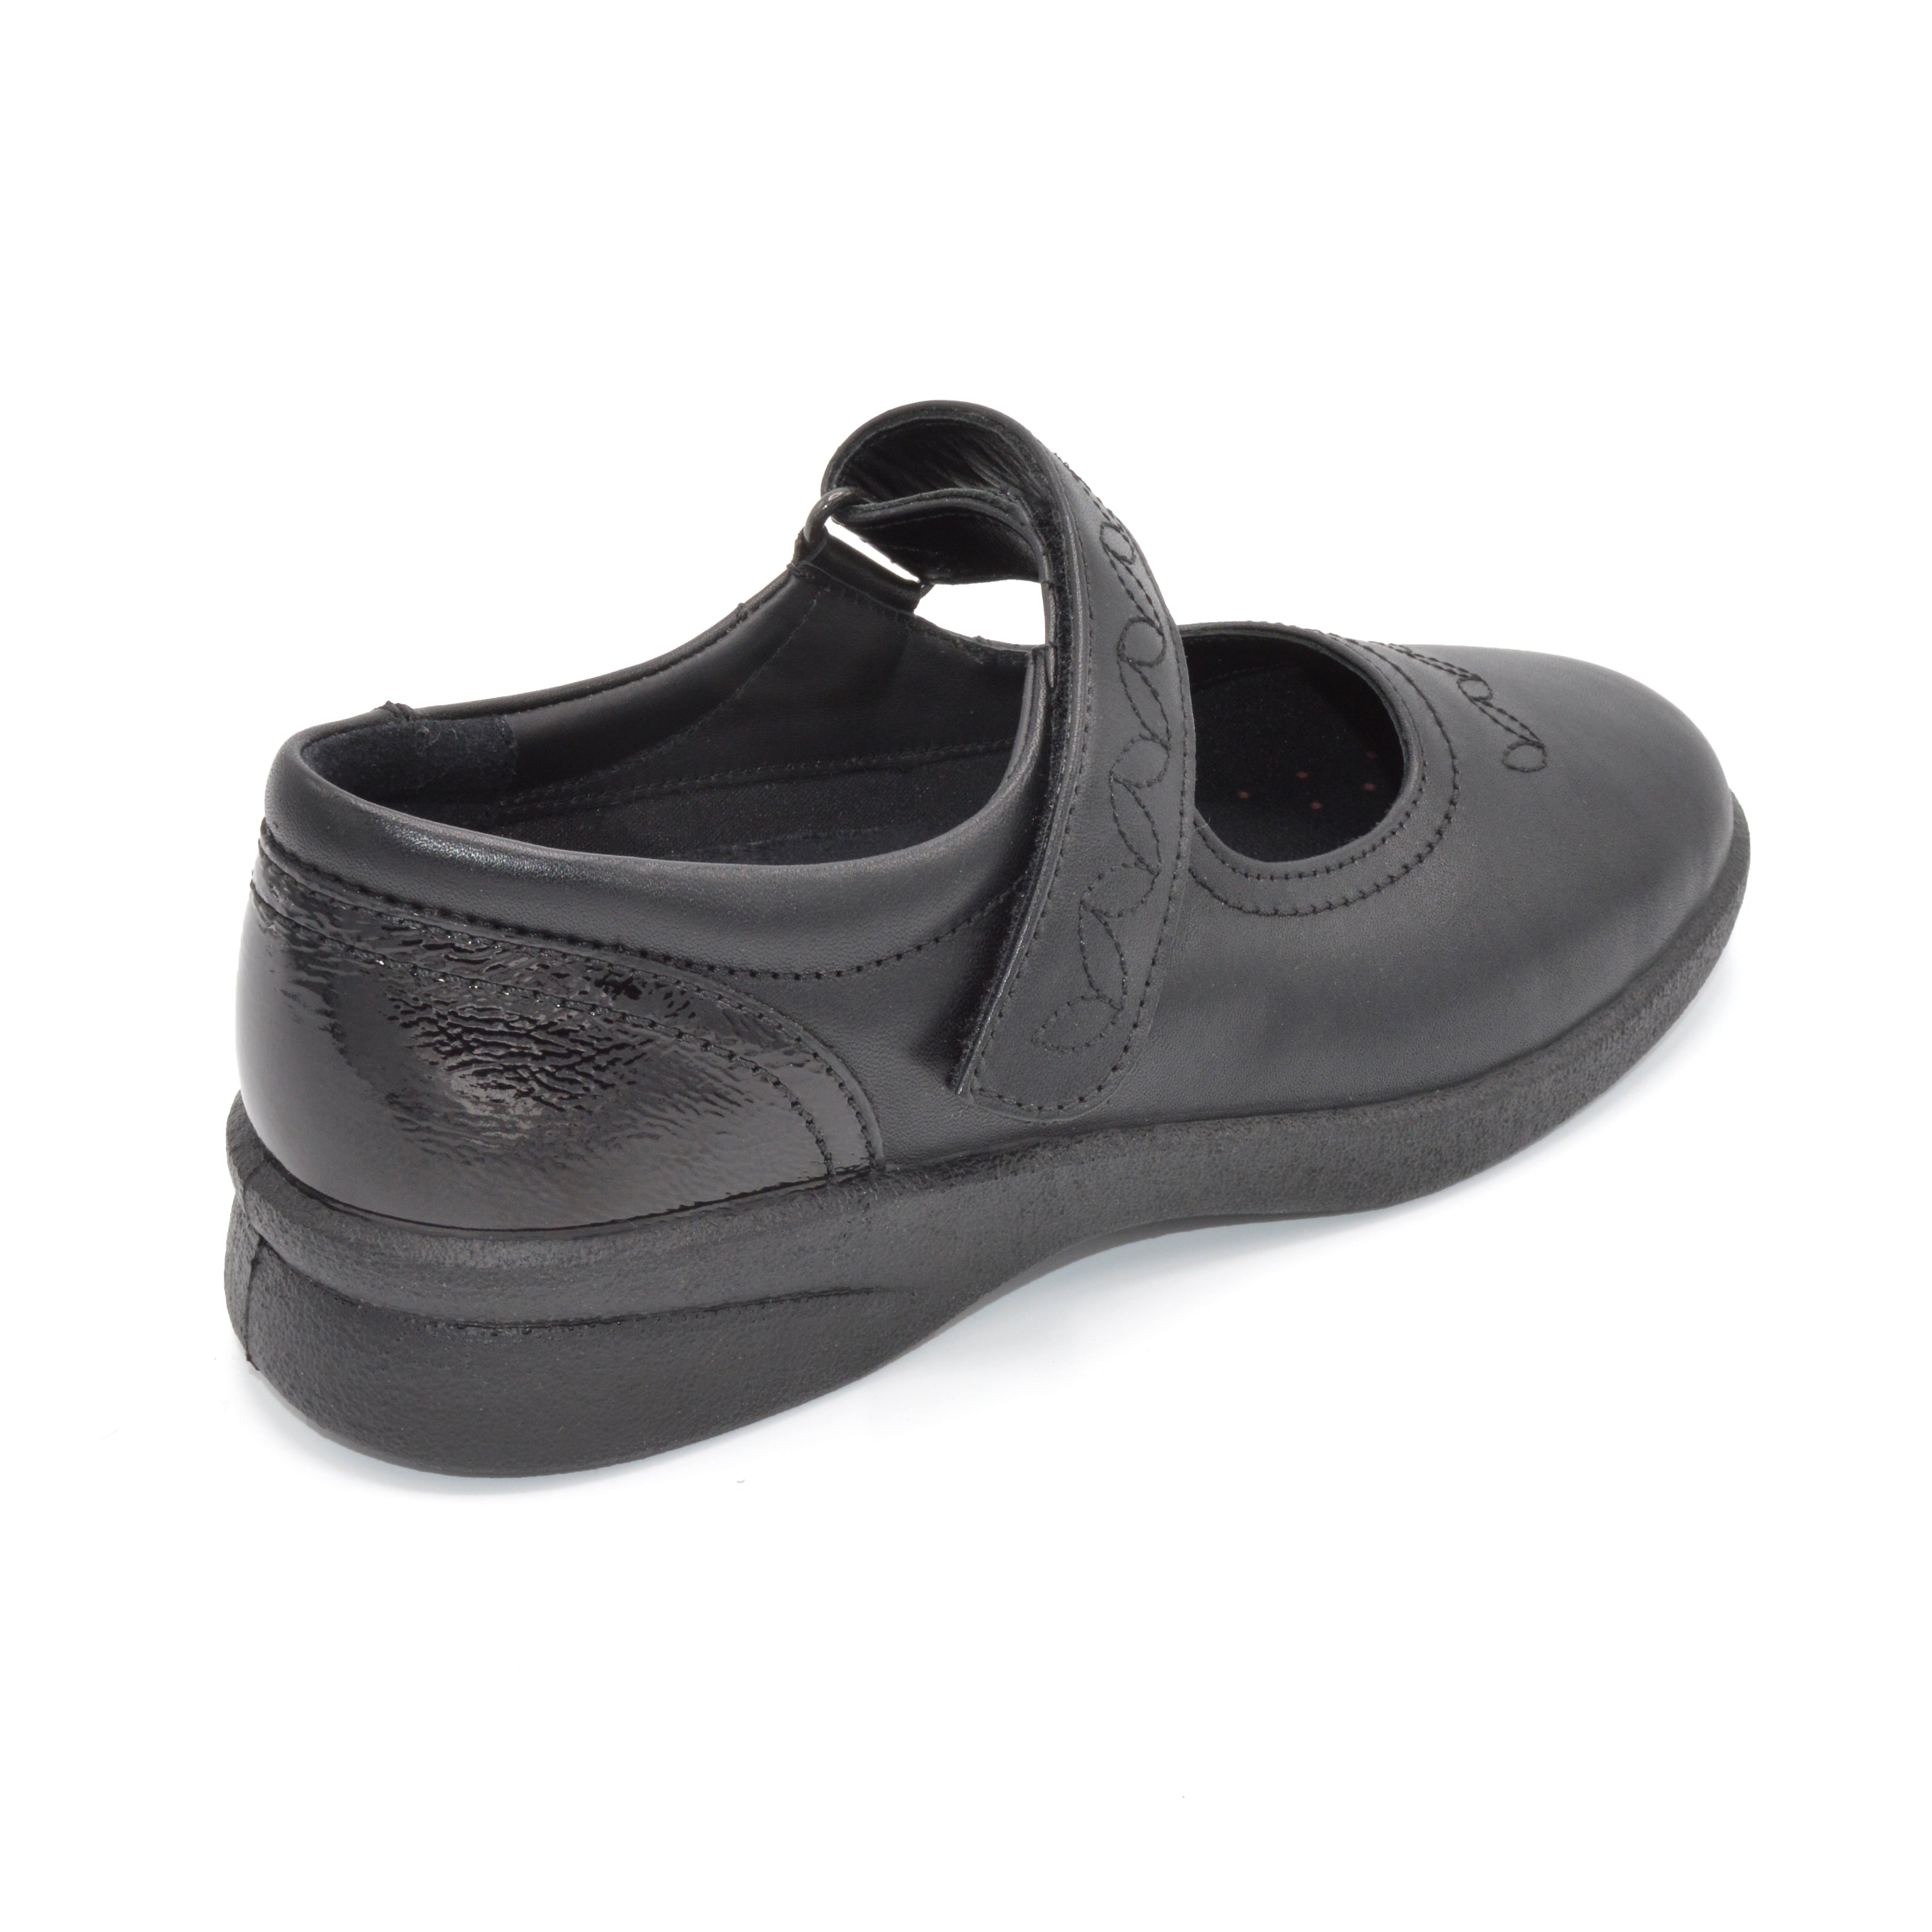 Black Velcro Ladies Shoes For Swollen Feet